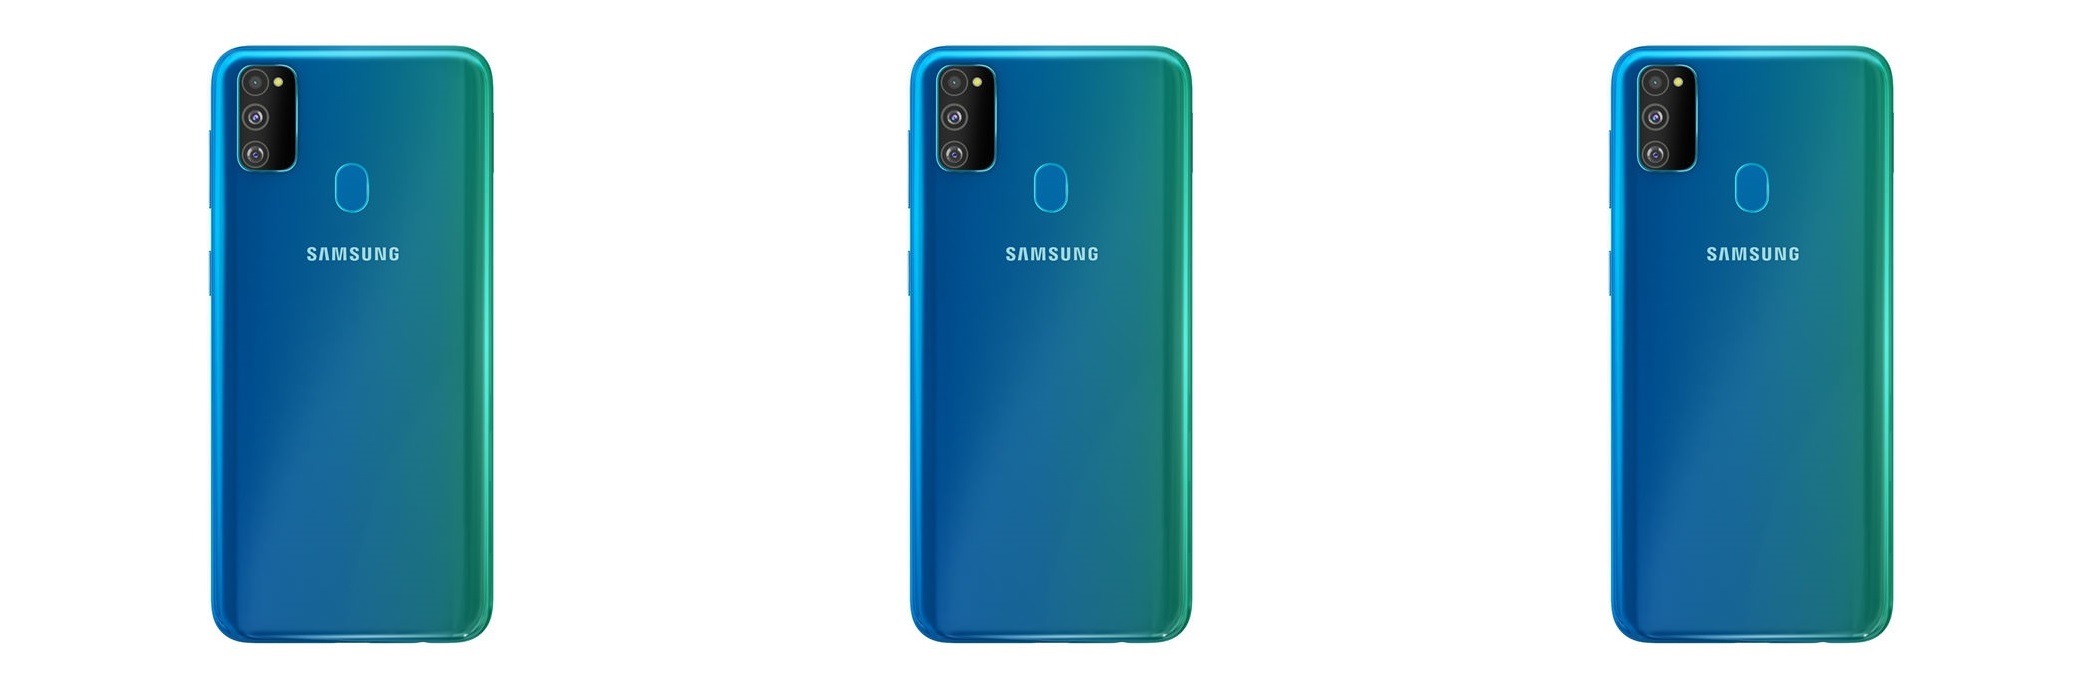 smartfon Samsung Galaxy M30s